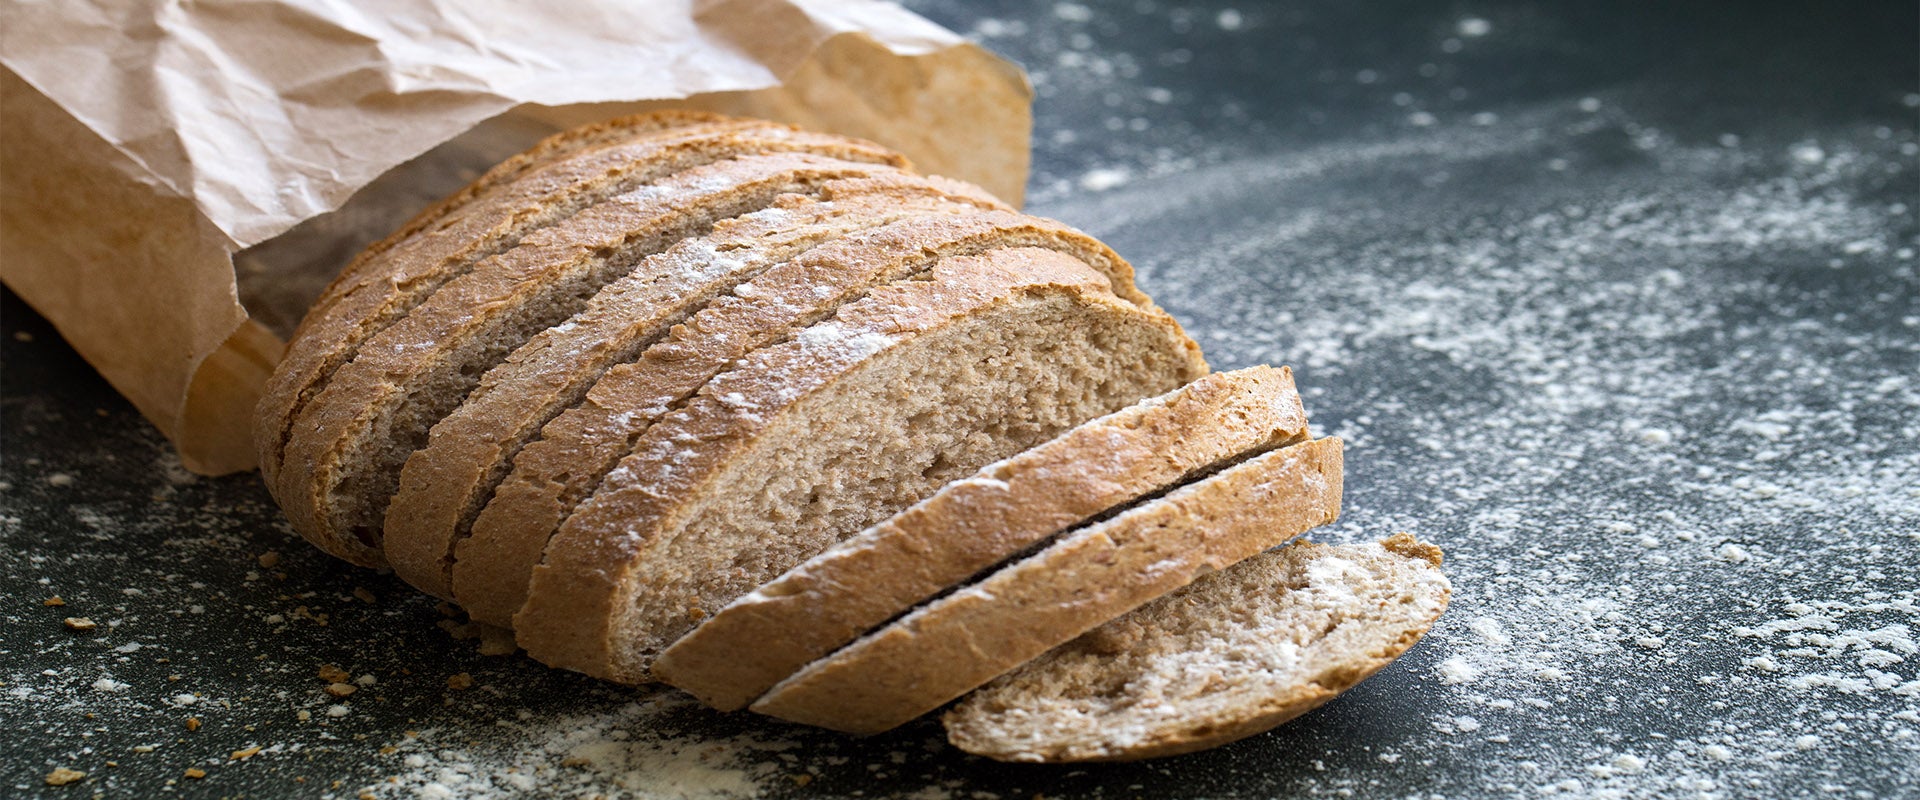 Gluten-Free bread that helped lead growth strategy